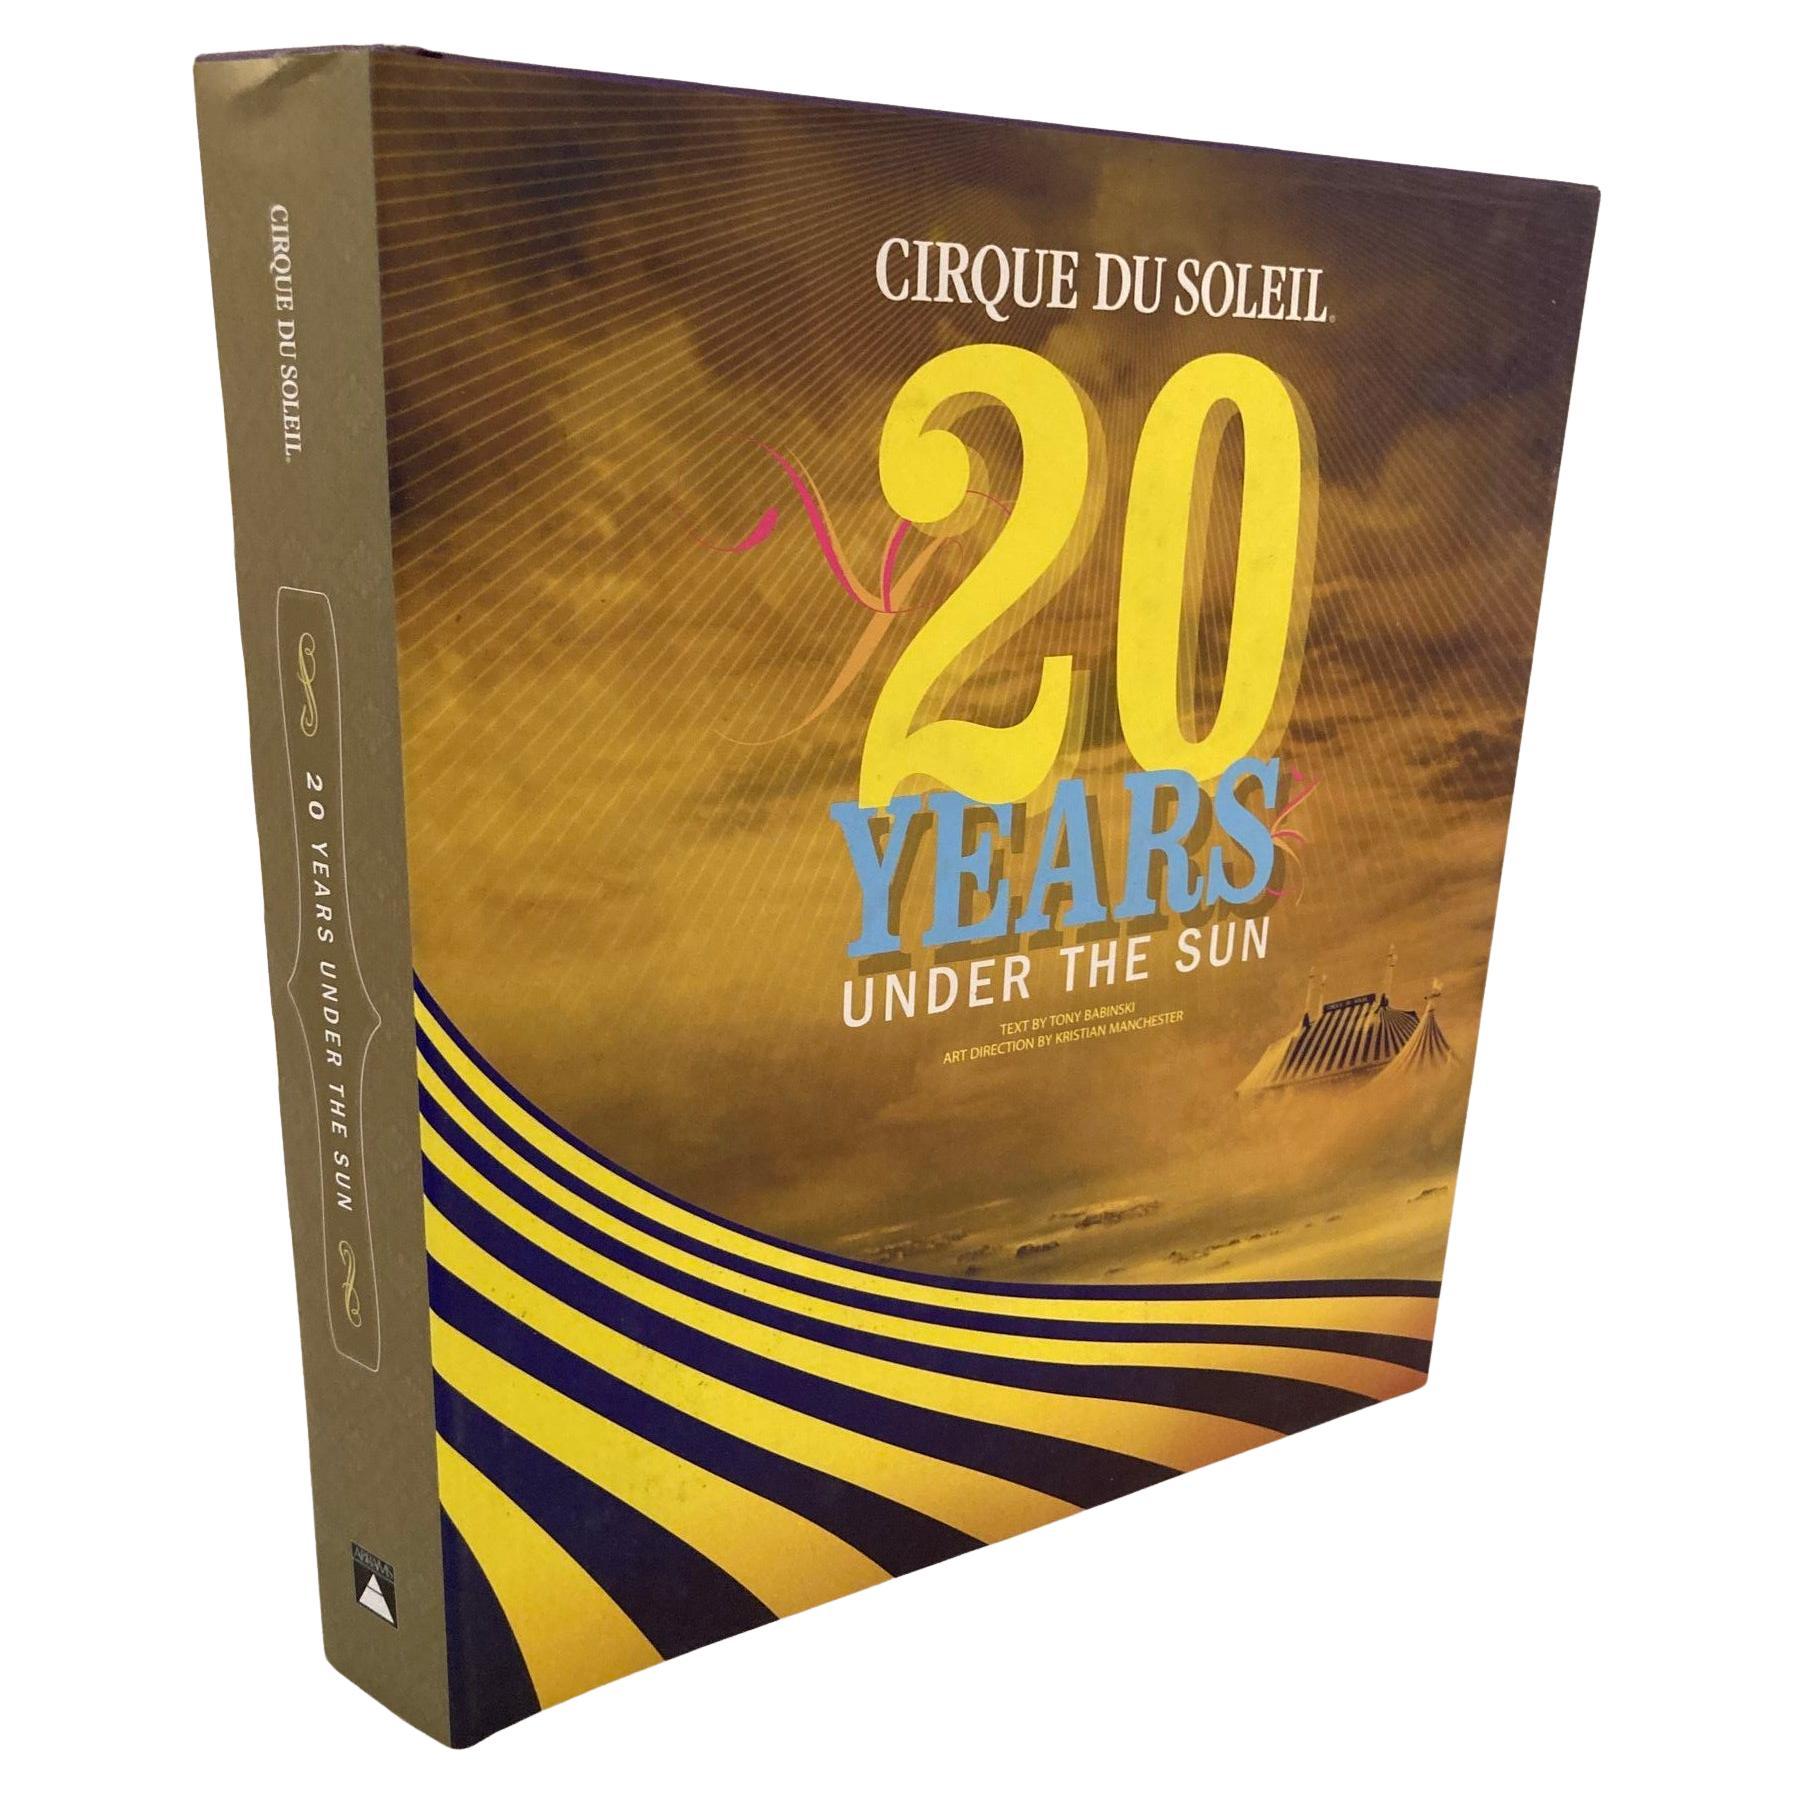 Cirque Du Soleil, 20 Years Under the Sun Hardcover Book